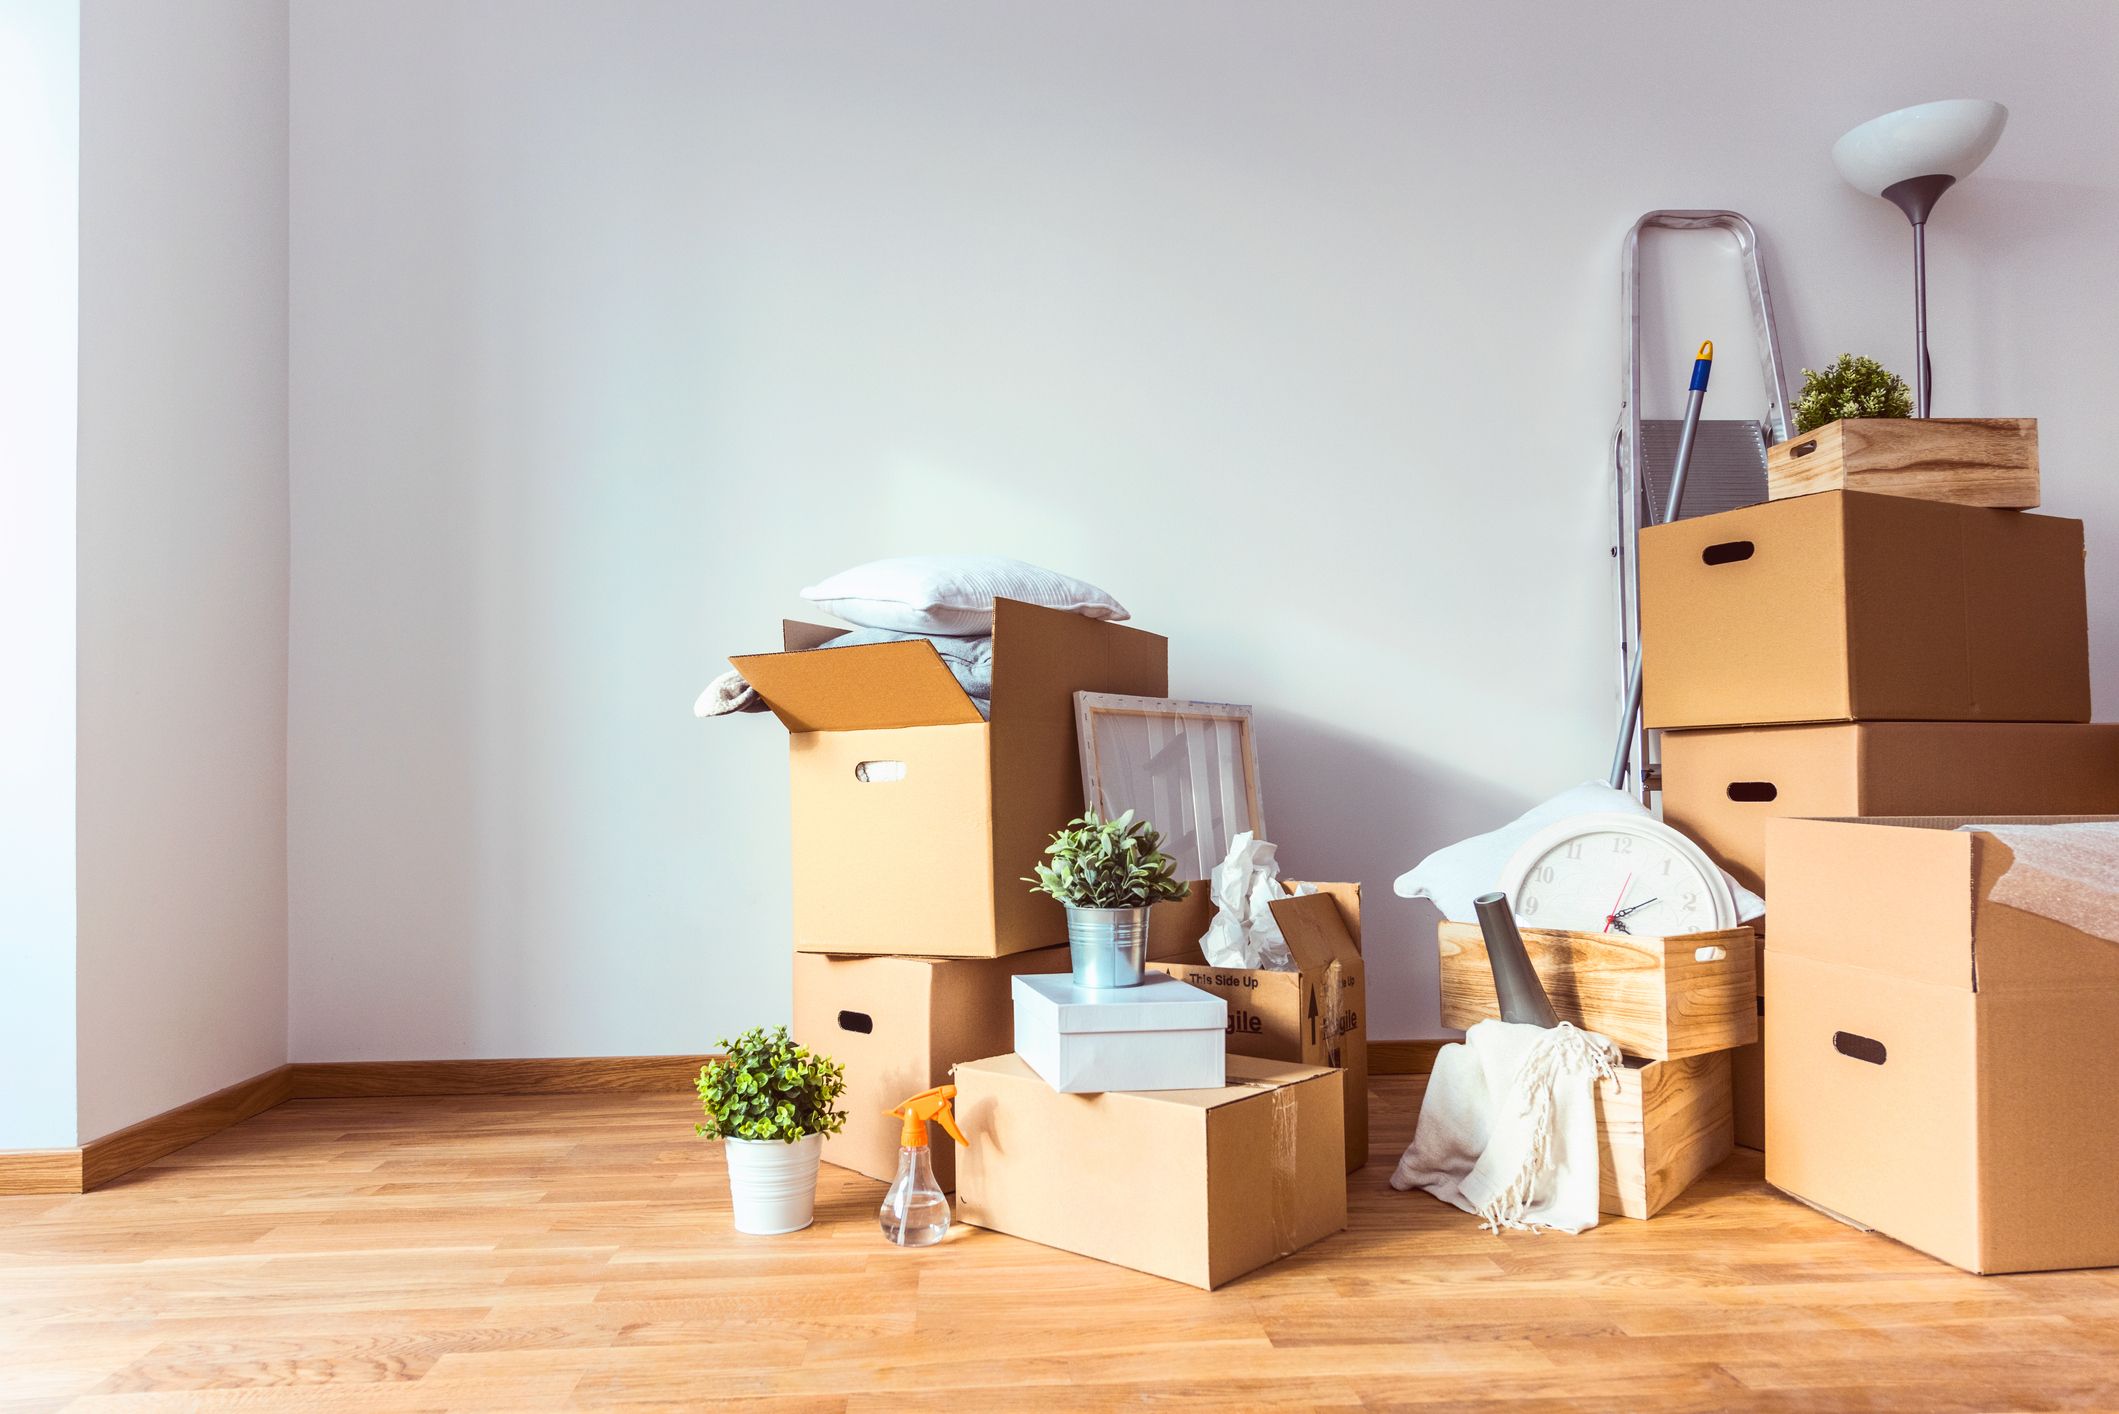 Twenty tips for an easy house move - by Bunnings Australia